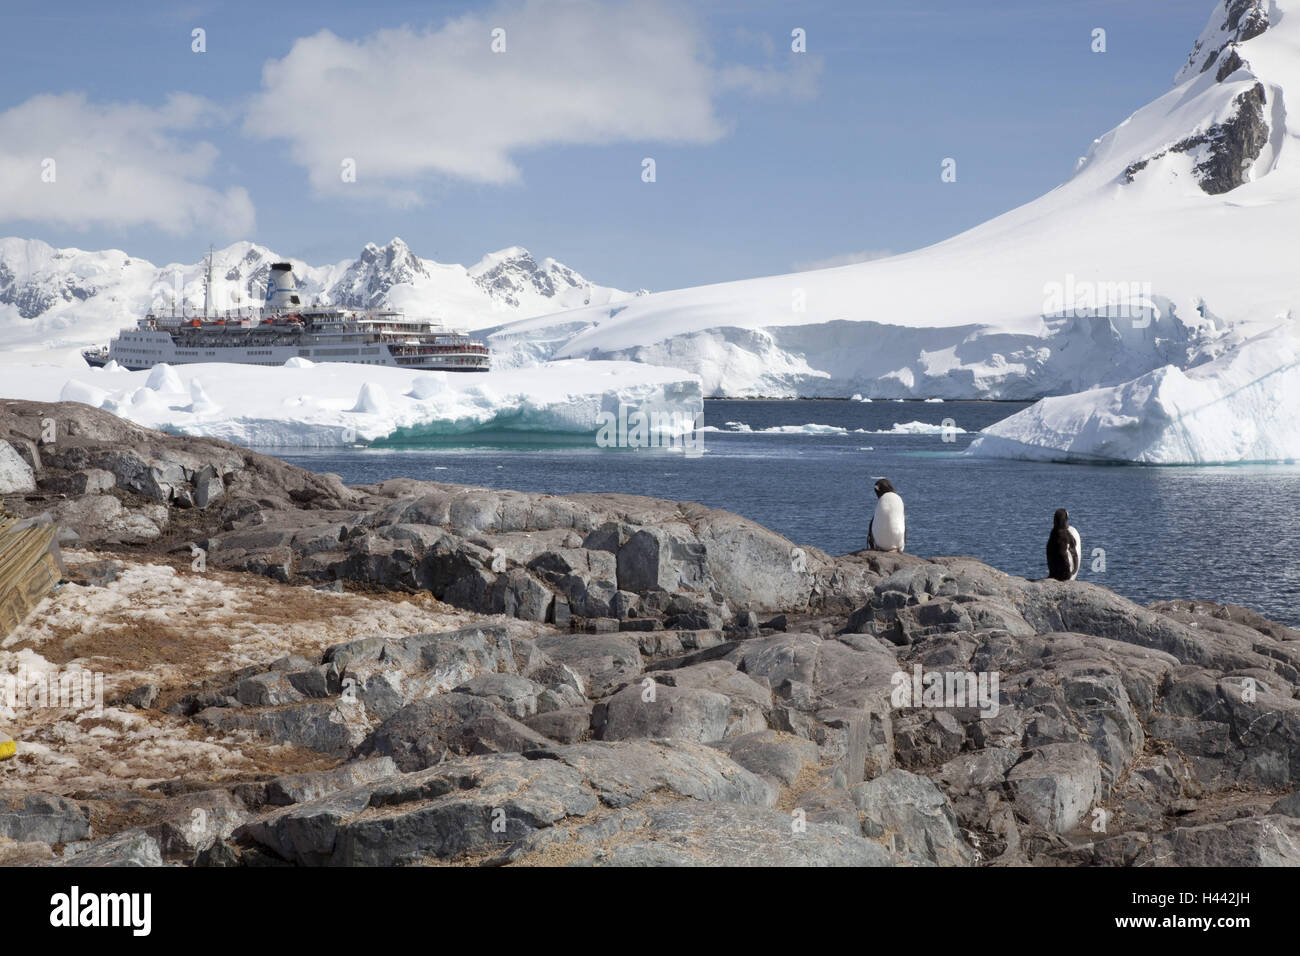 Antarctic, Antarctic Ocean, coastal region, cruise ship Marco Polo, Stock Photo